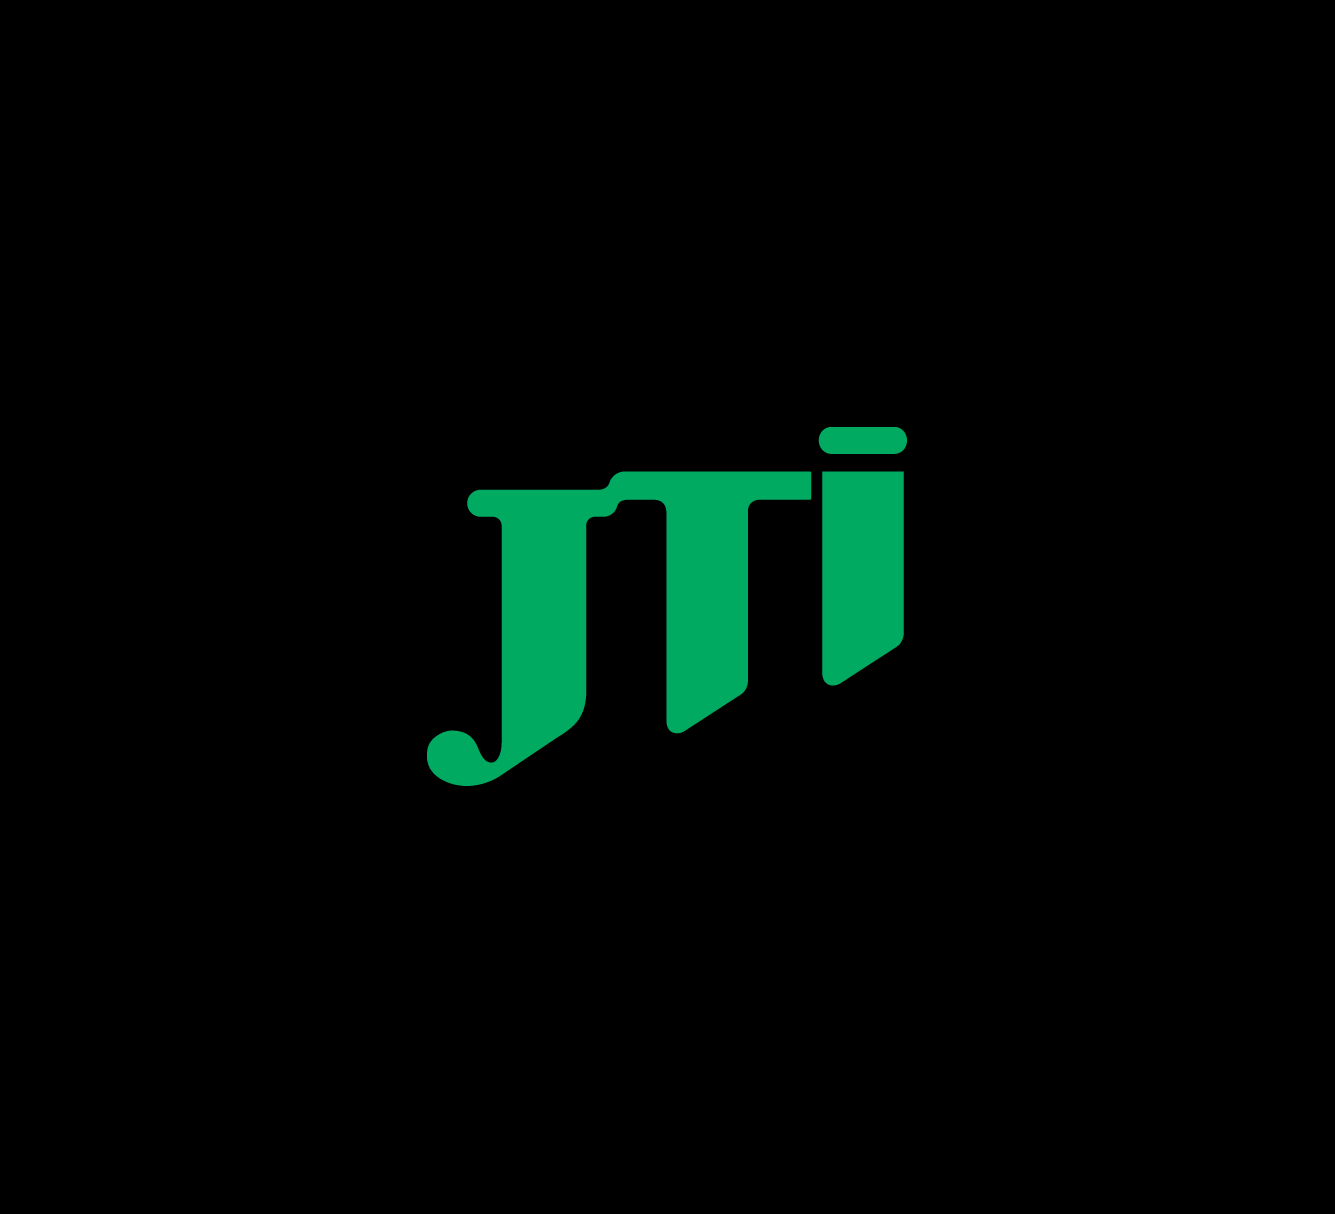 Jti ru. Japan Tobacco International логотип. JTI табак. Петро JTI лого. JTI логотип сигареты.